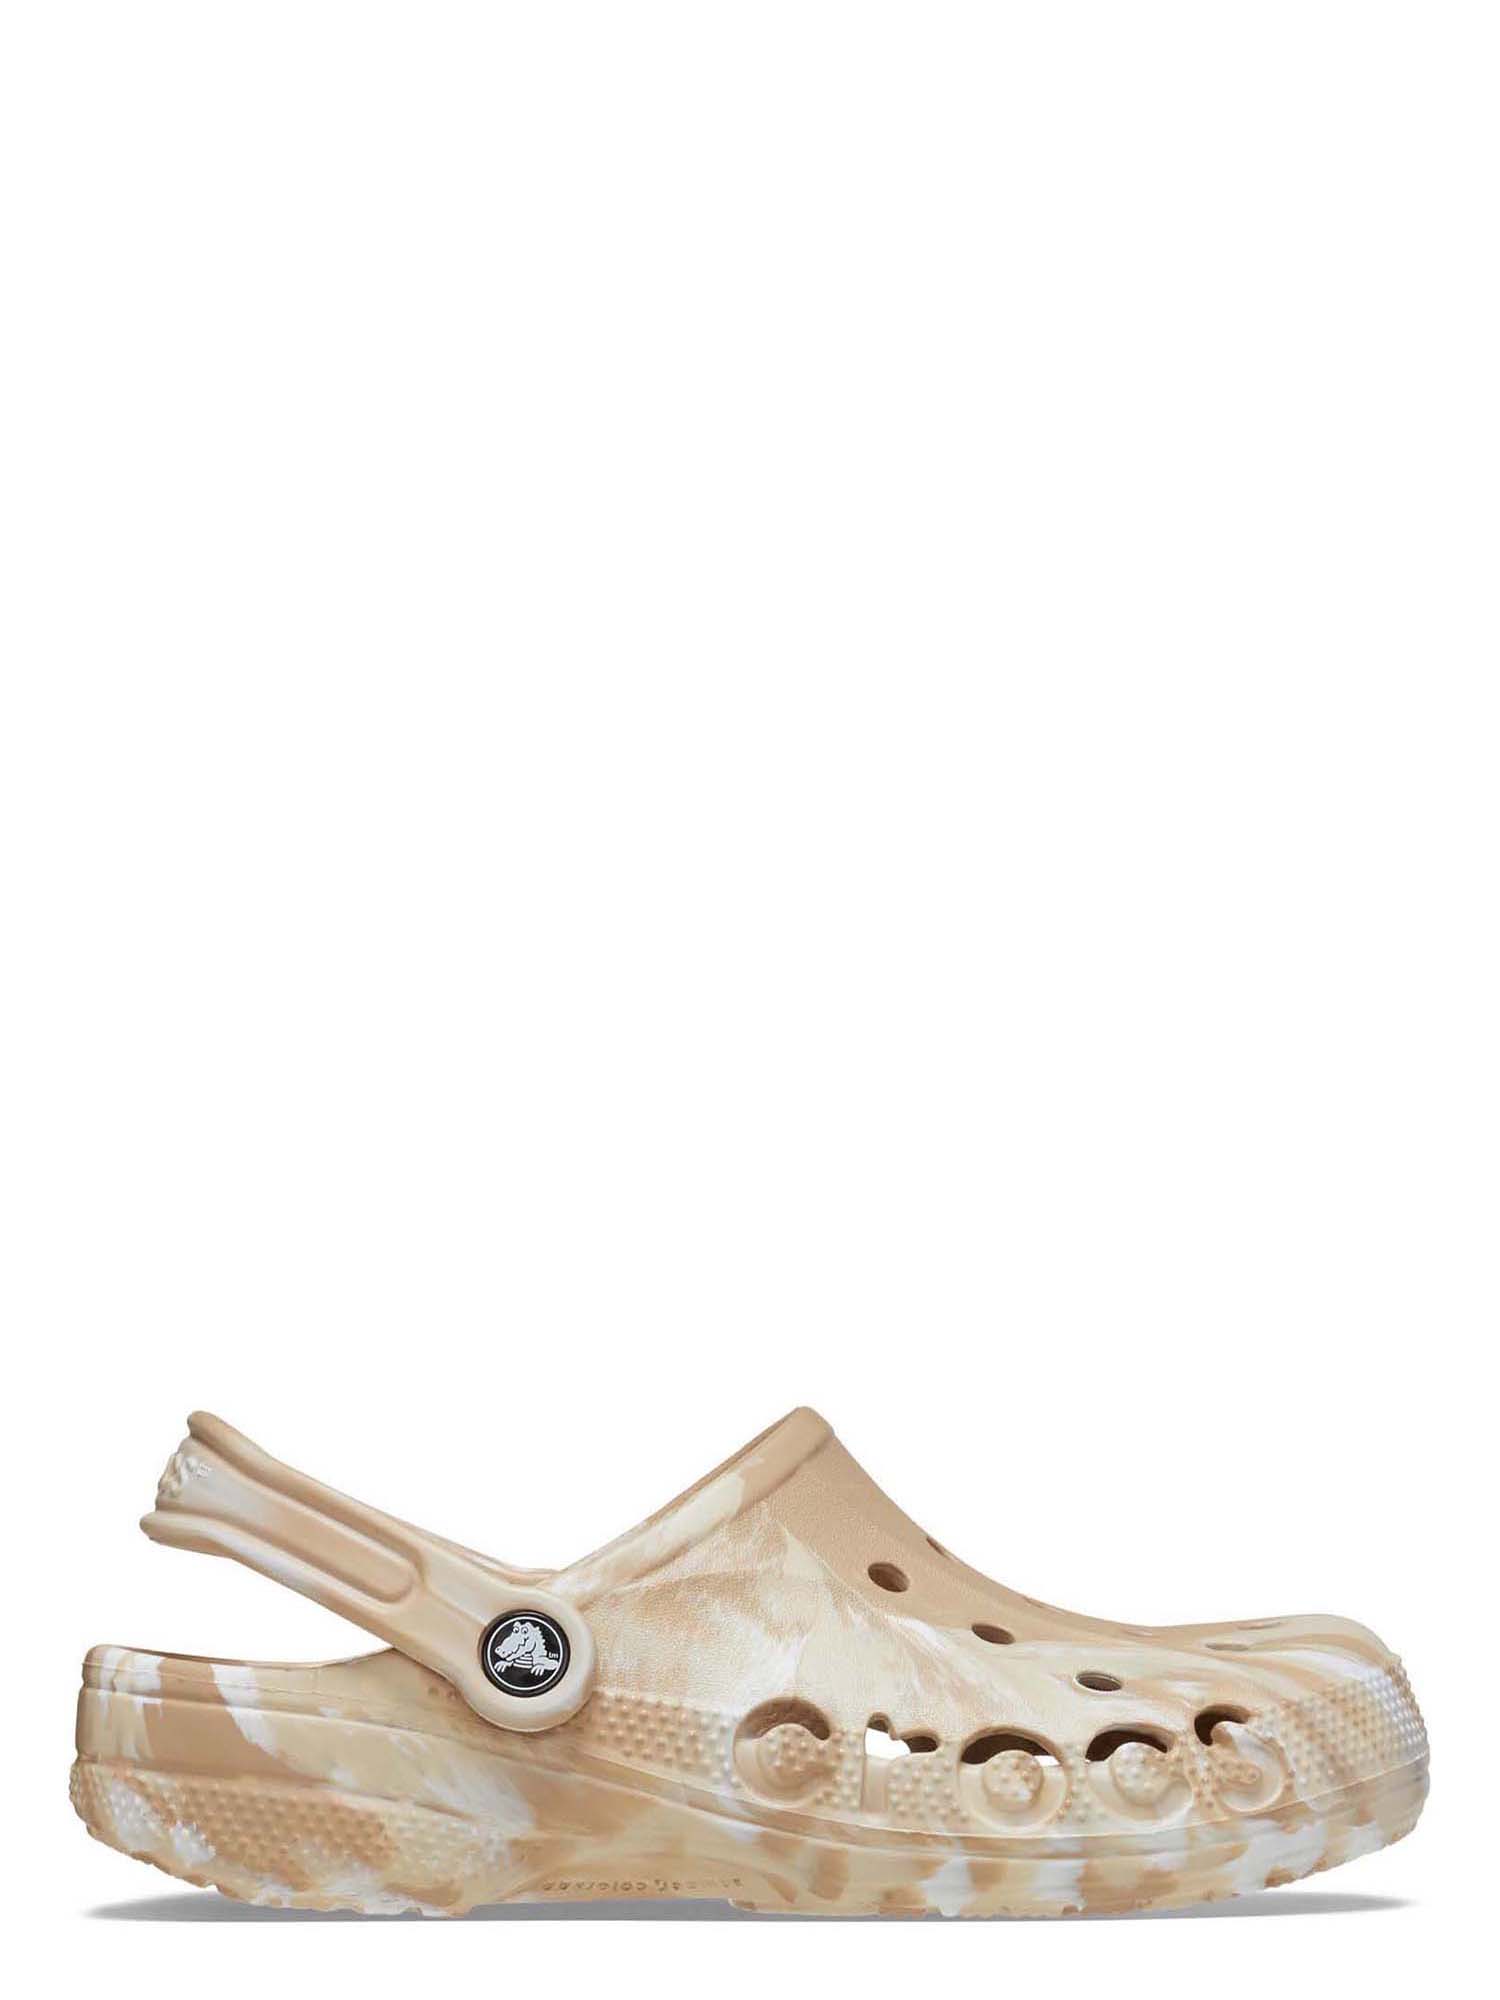 Crocs Unisex Baya Marbled Clog Sandal - image 3 of 7